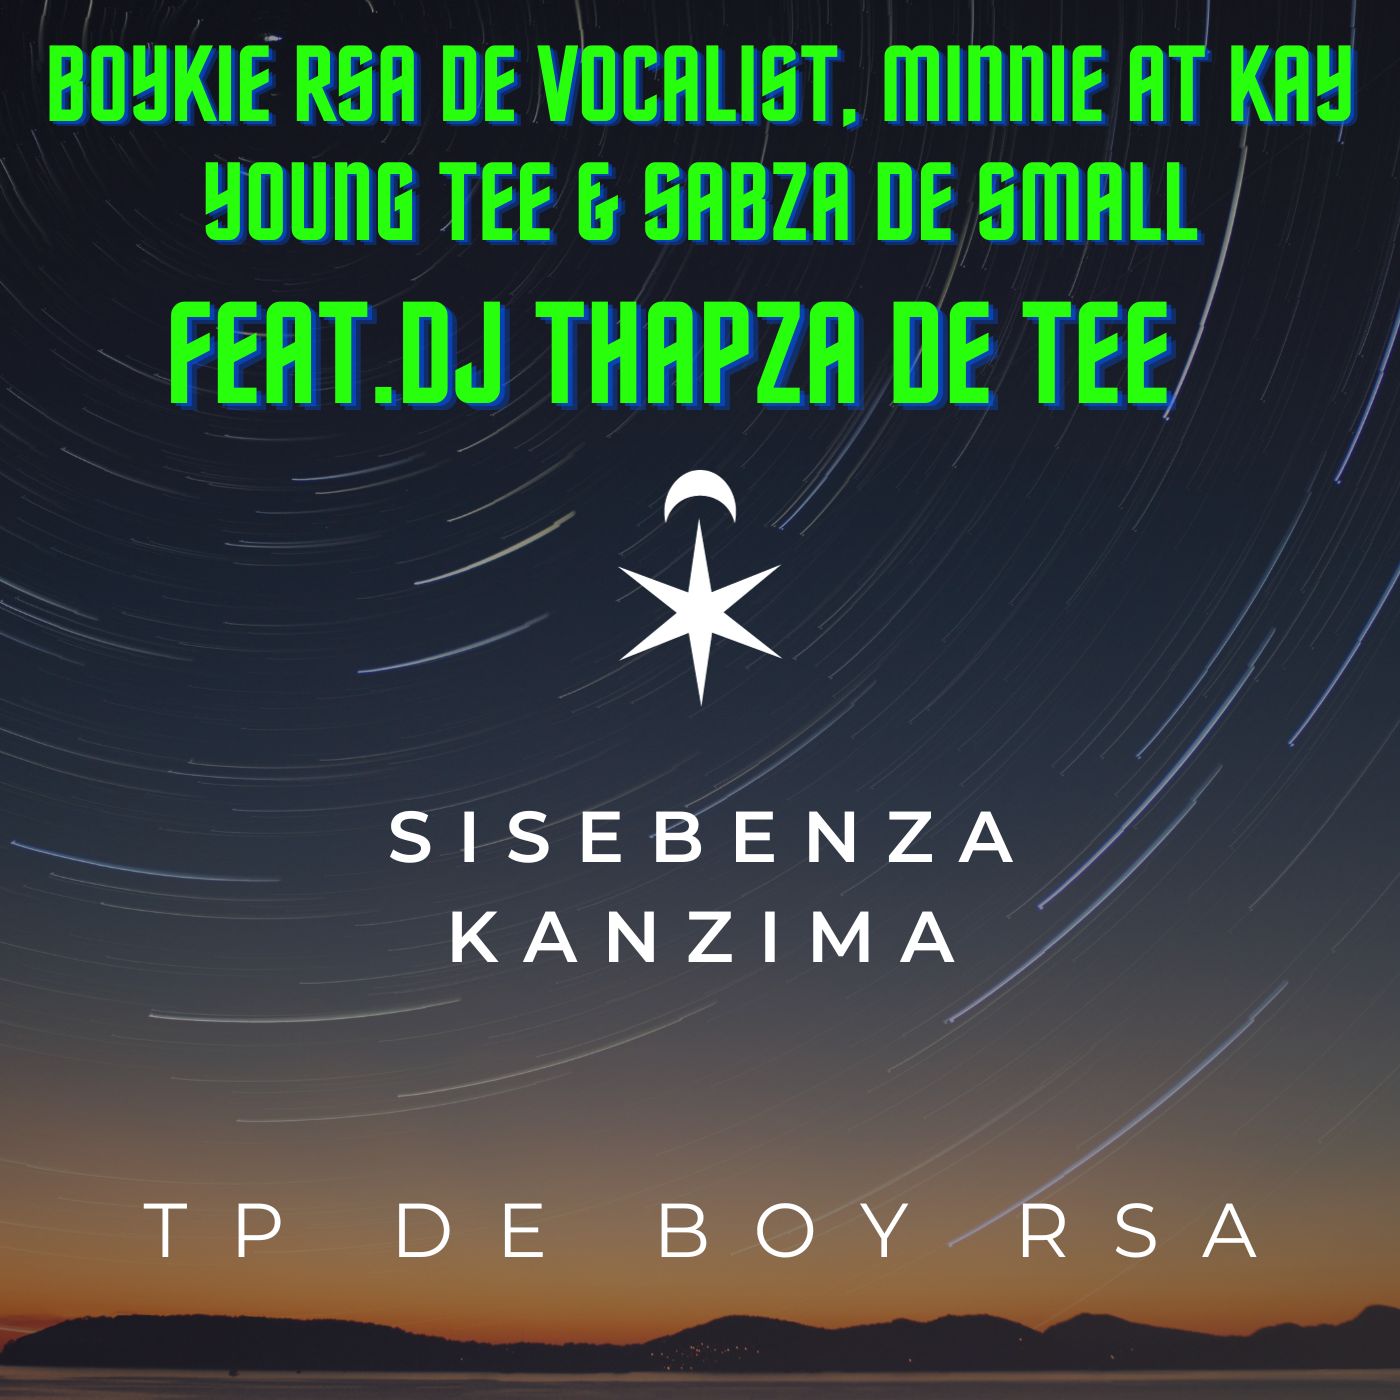 sisebenza kanzima - Boyki Rsa De Vocalist, Minnie AT Kay Feat. DJ Thapza De Tee